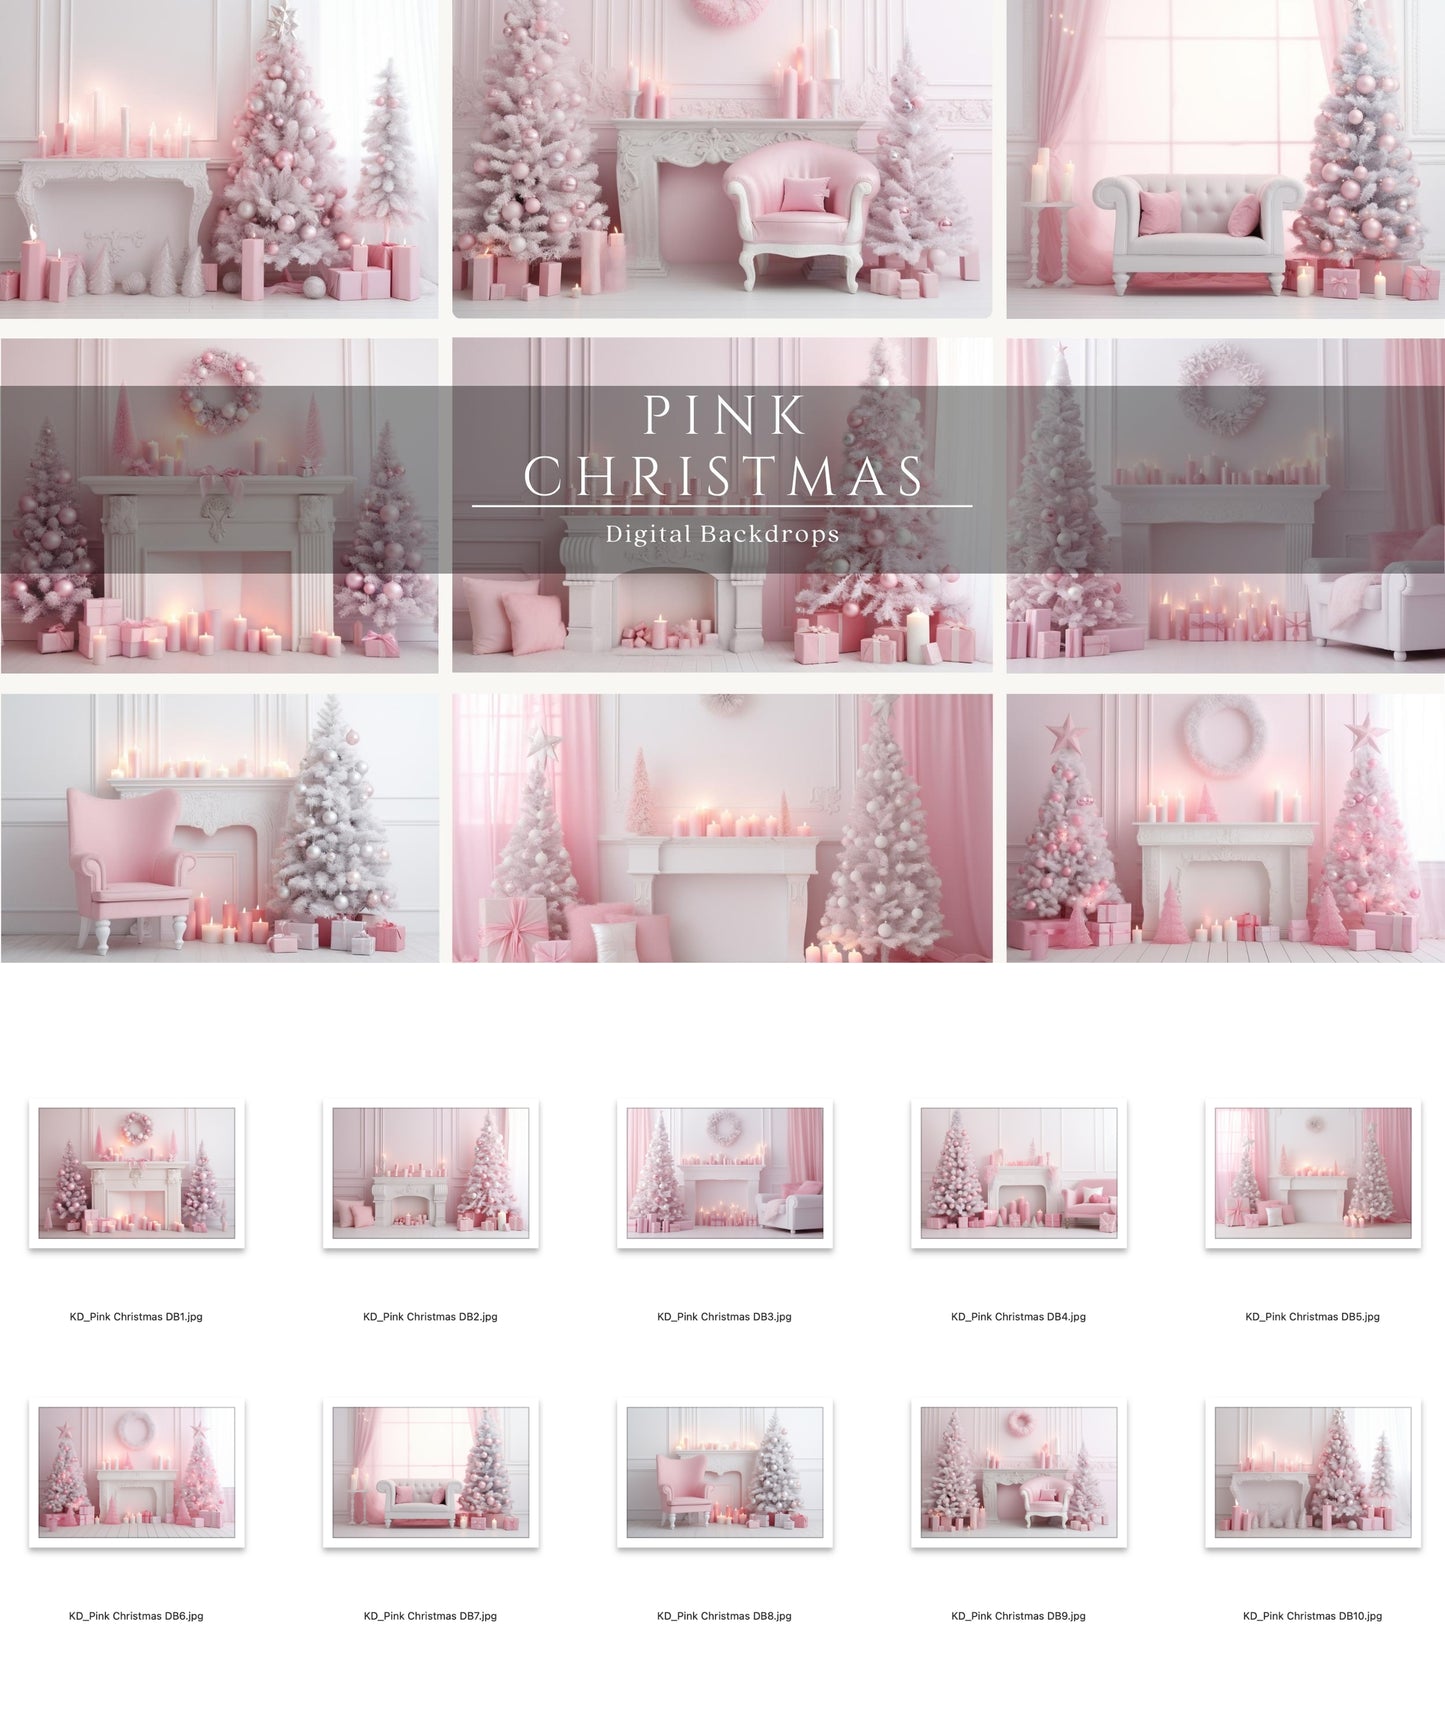 Pink Christmas Digital Backdrops